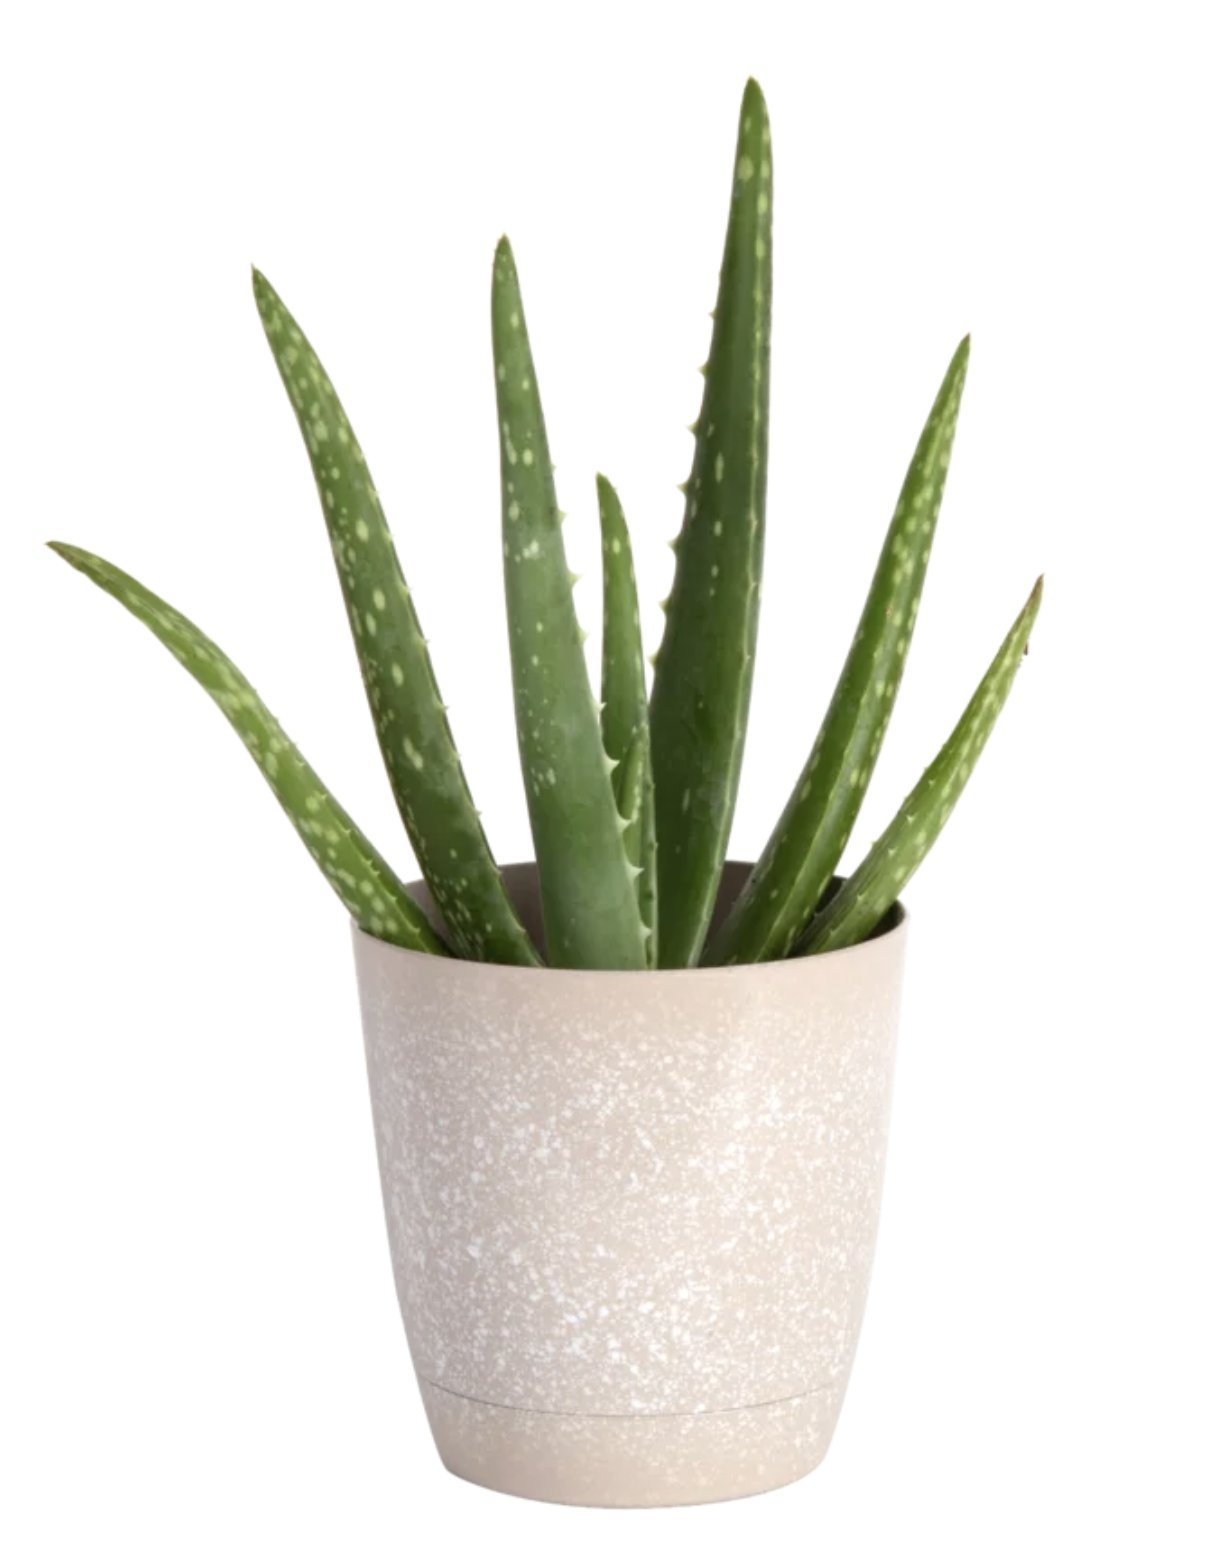 Aloe Succulent in Planter - Image 0